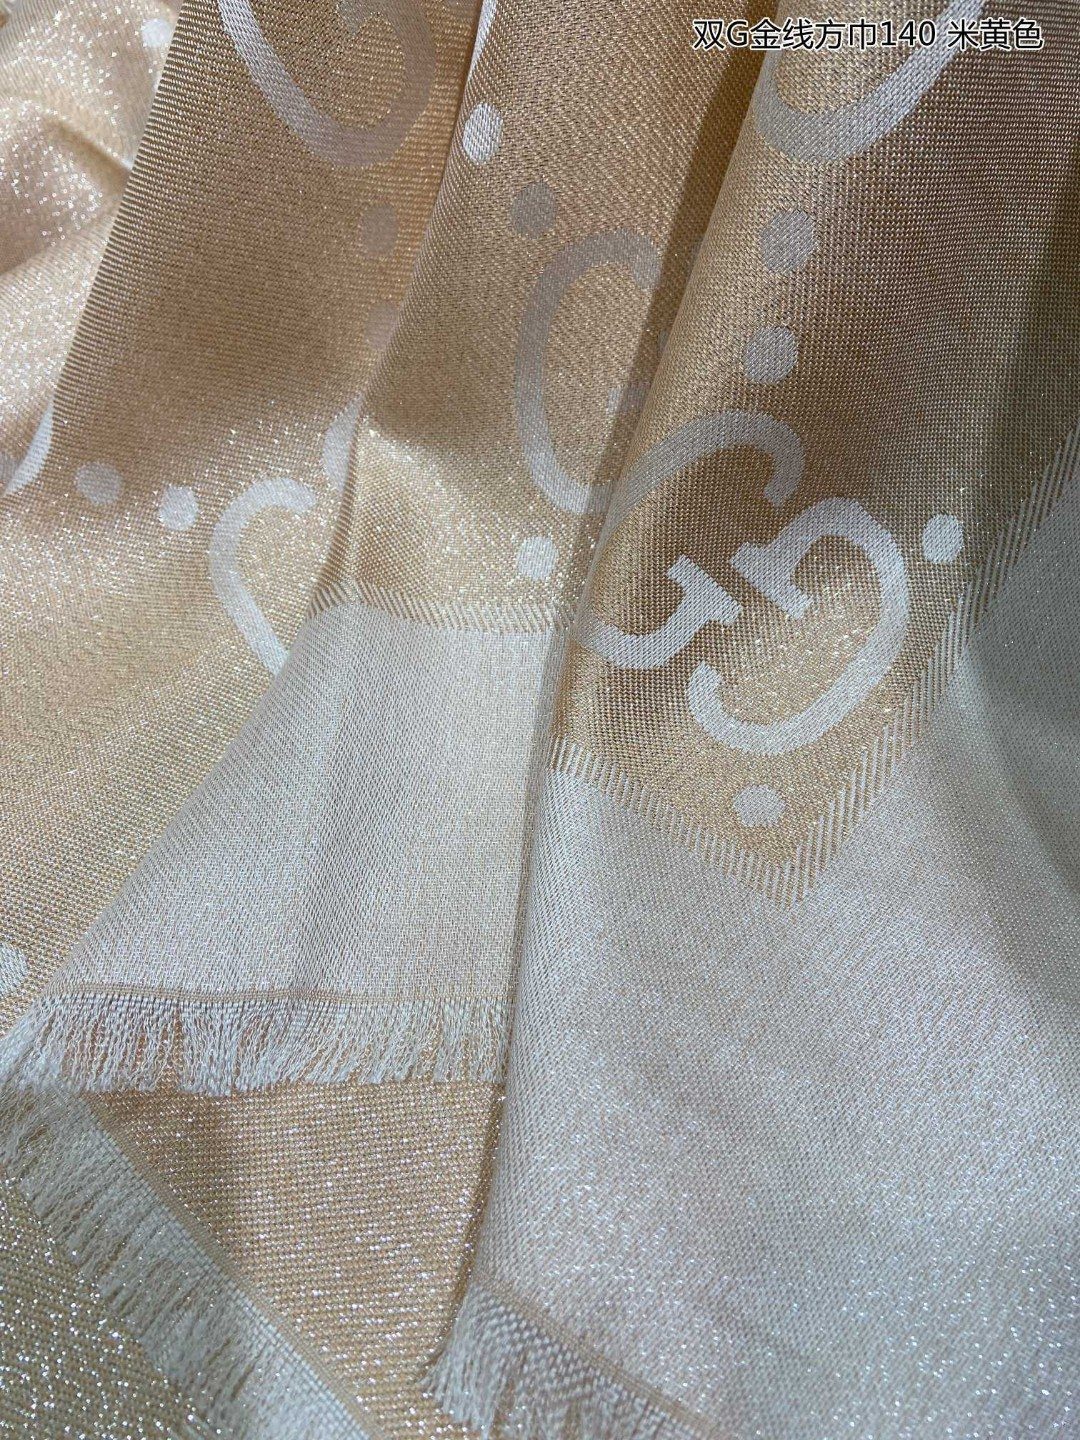 G家双G金线方巾140璀璨至极女神必备的实物真的美得太闪耀了品质极好️款式经典大方时髦不过时随便什么时候